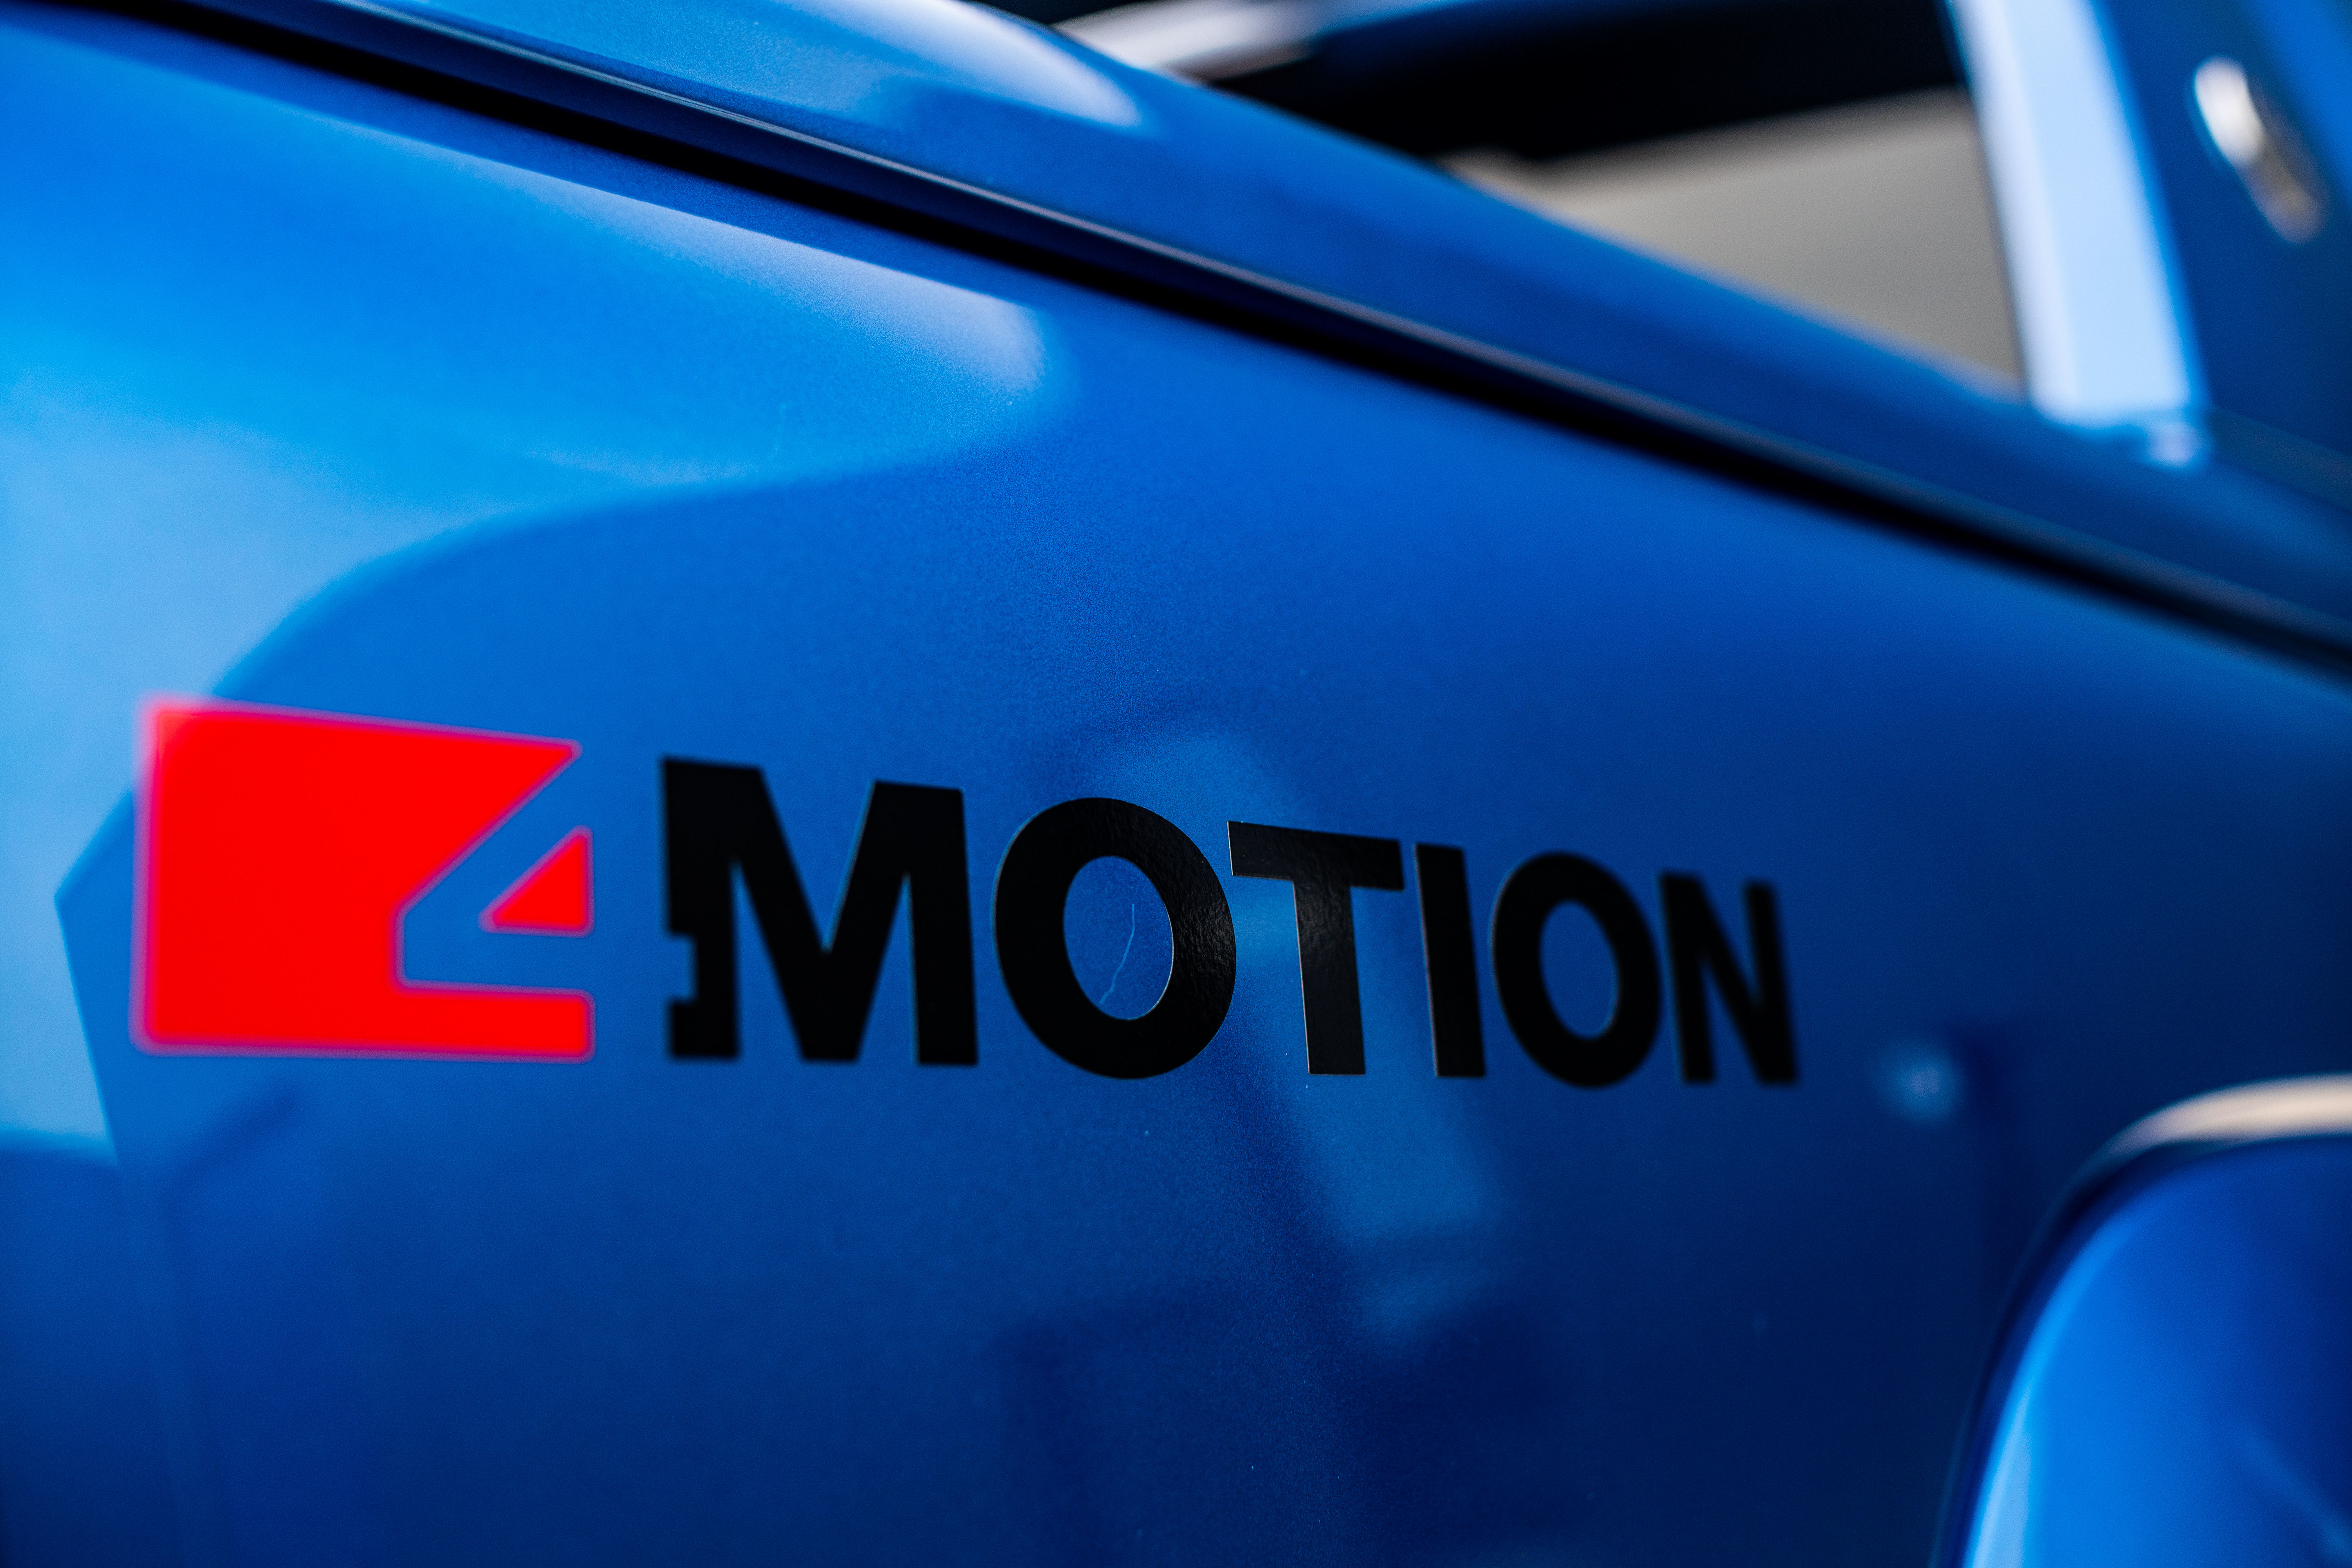 Volkswagen motion. Амарок 4 Motion. Фольксваген мотион. Volkswagen 4motion шильдик. 4 Motion эмблема.